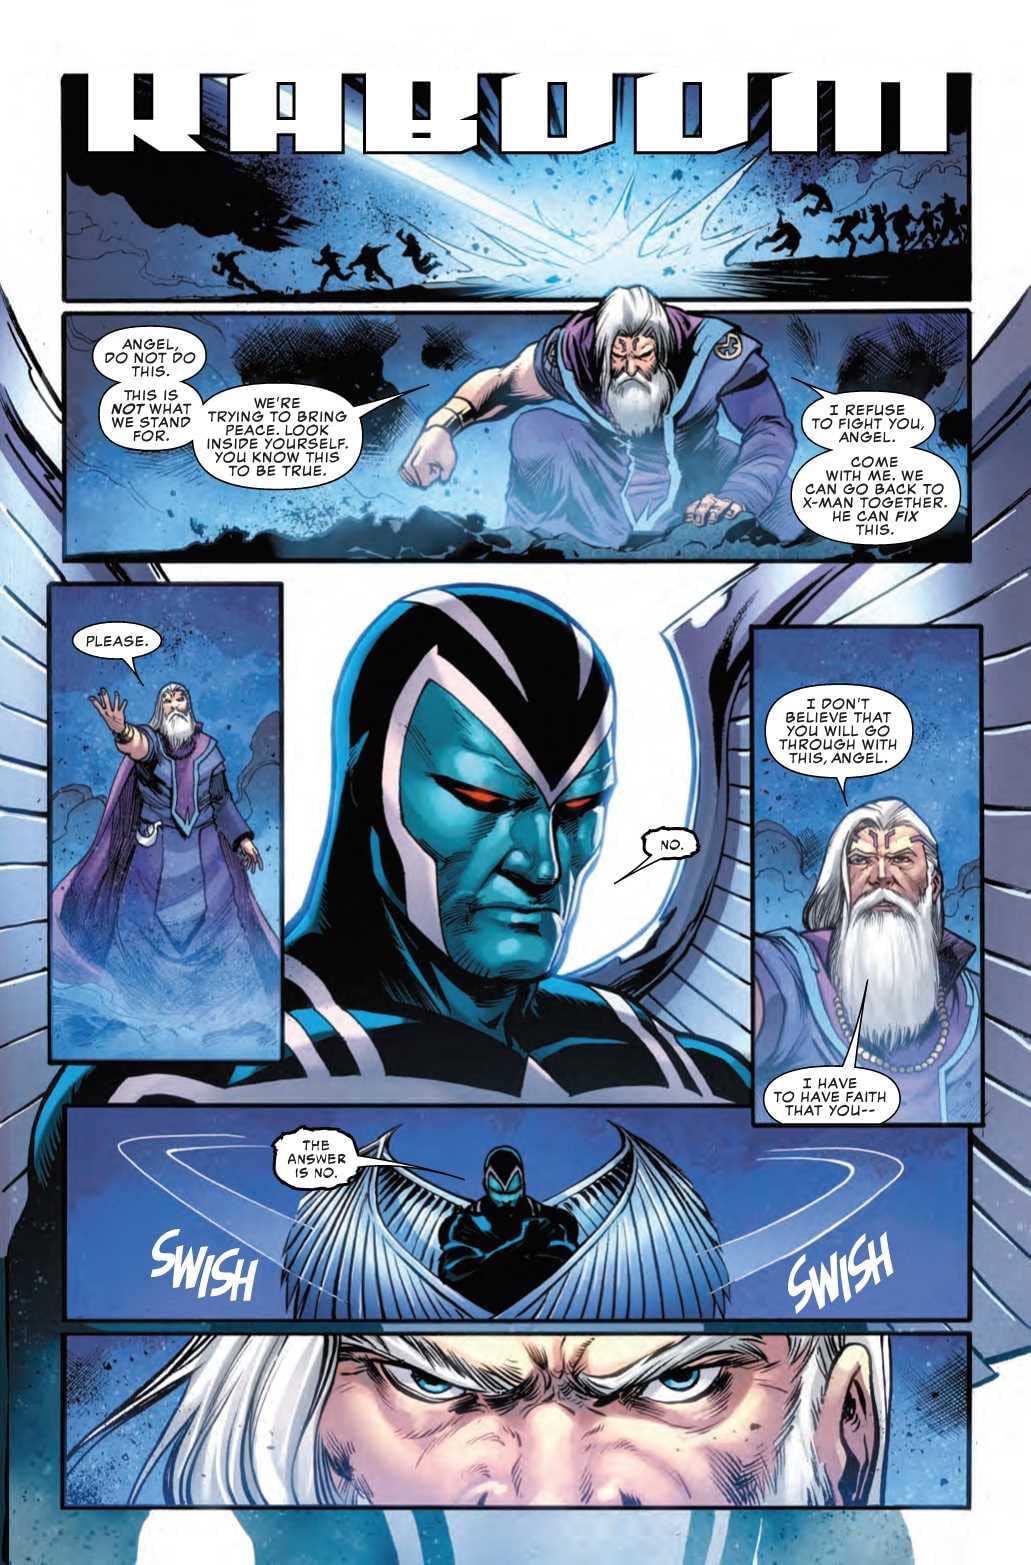 Archangel's Loyalty Tested in Next Week's Uncanny X-Men #6